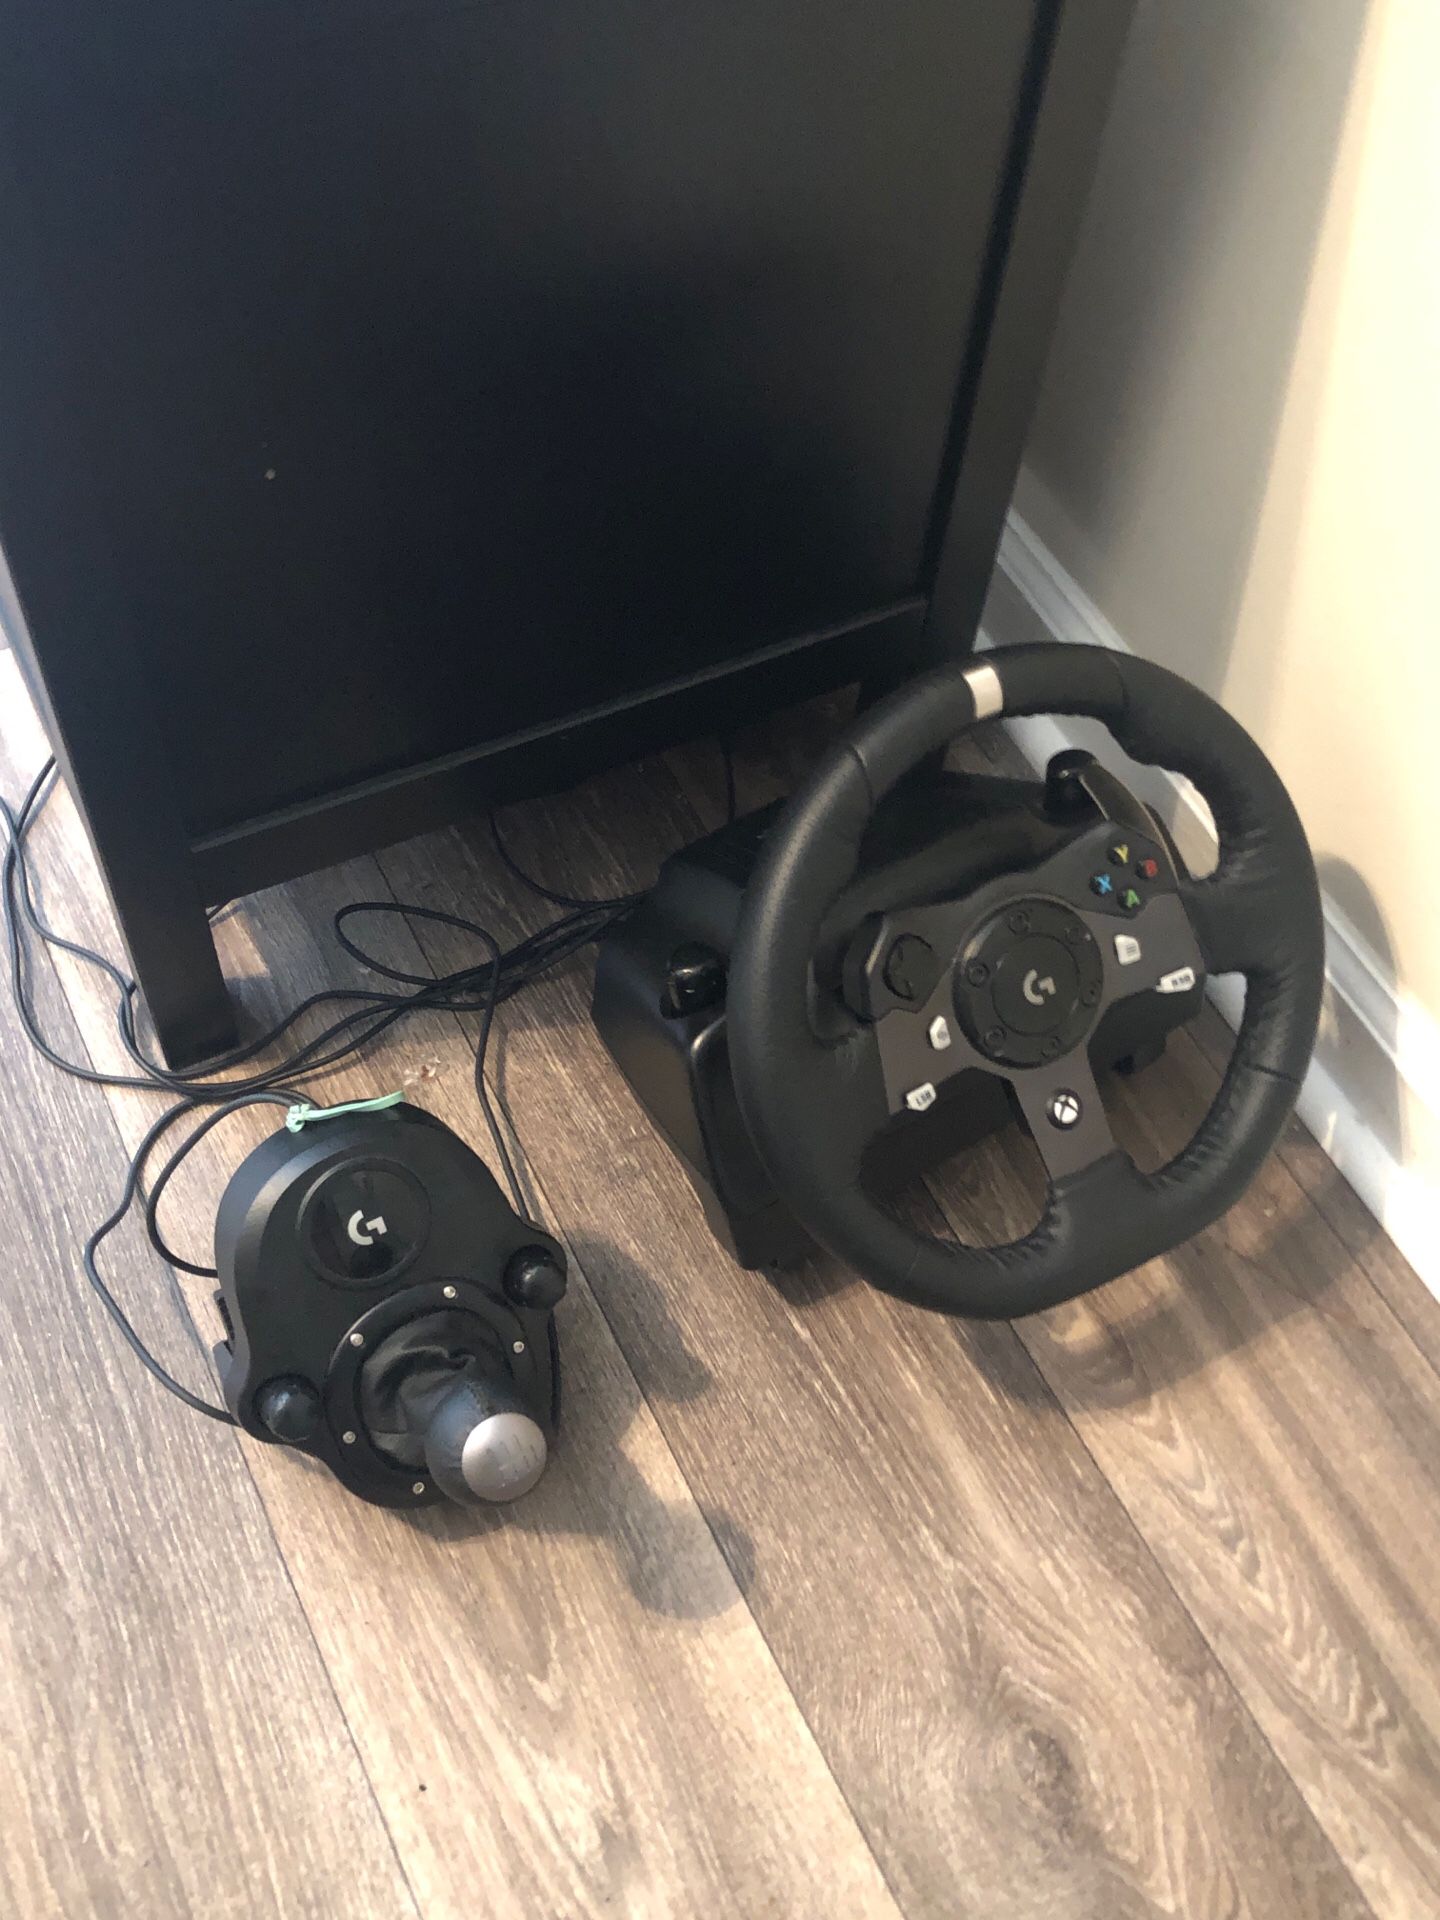 Gaming wheel setup Xbox and computer